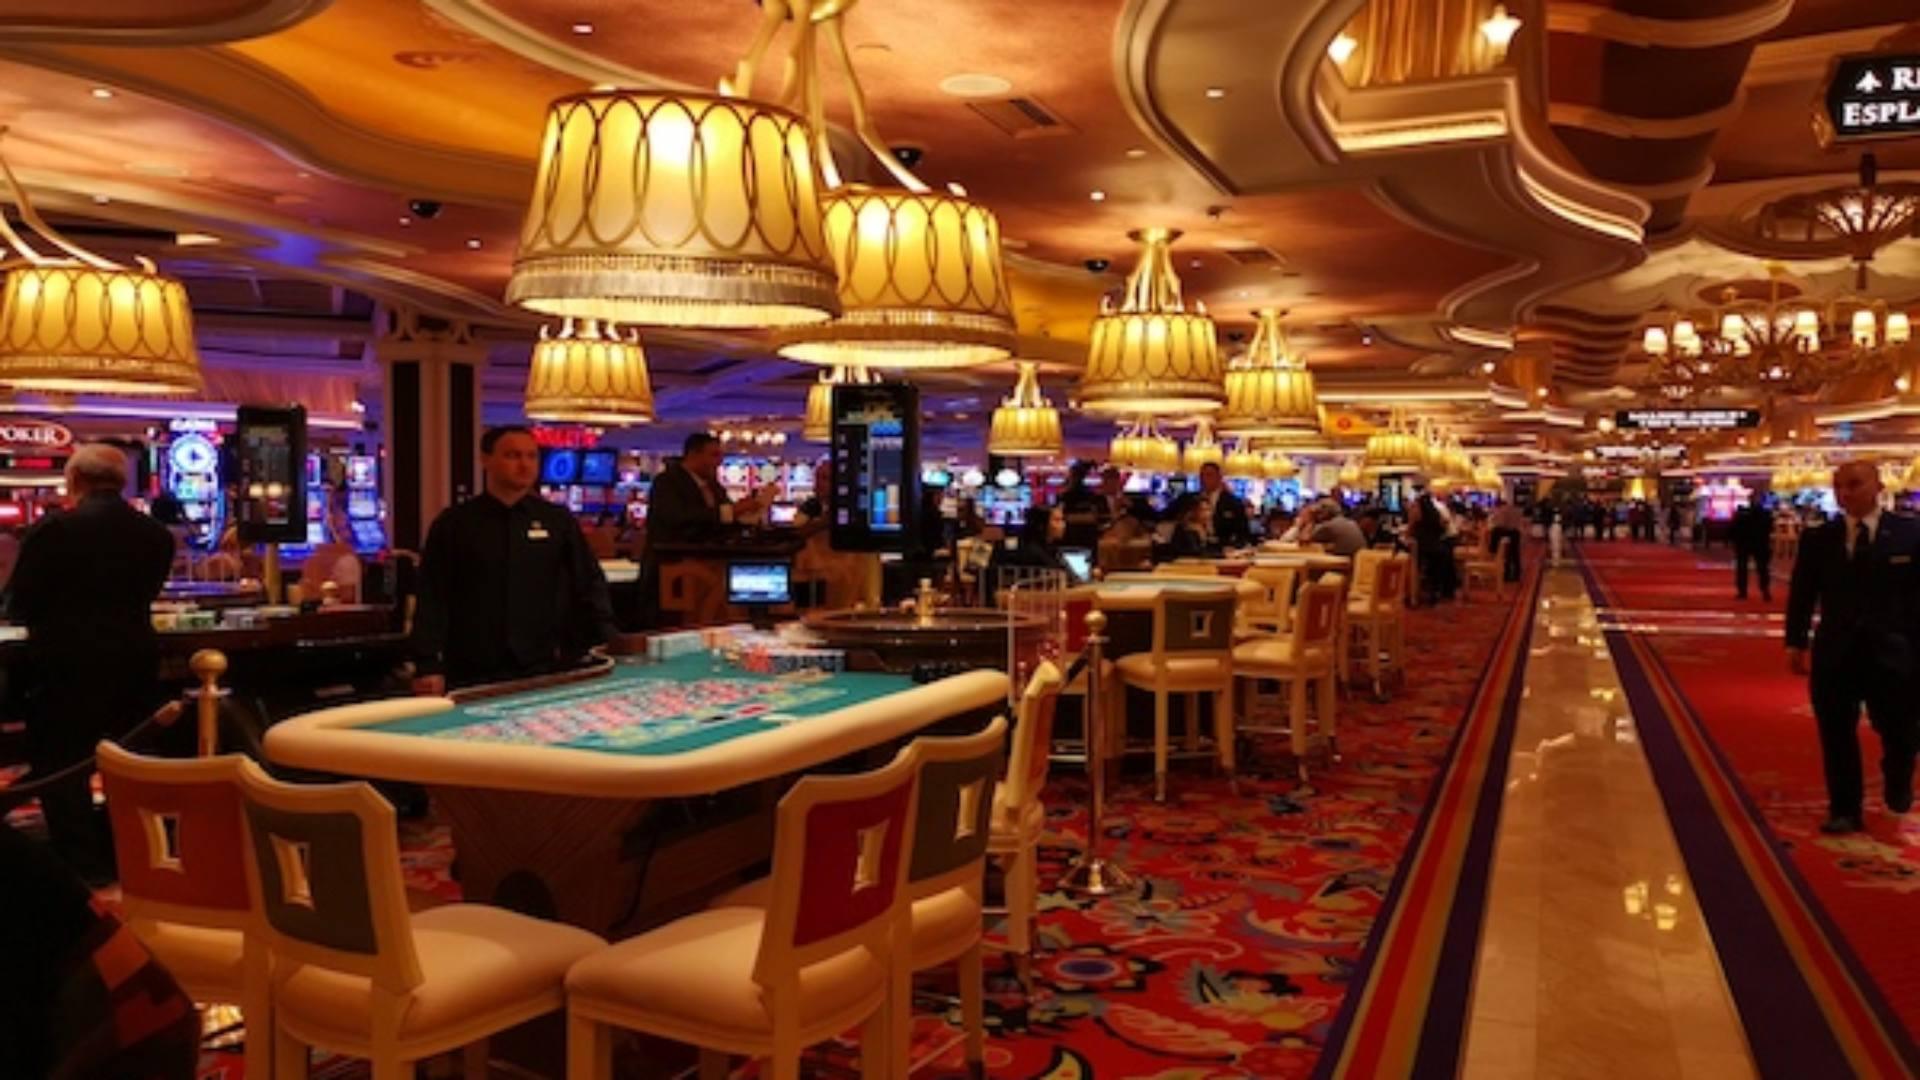 The Psychology Behind Casino Design - Brazilian Designers